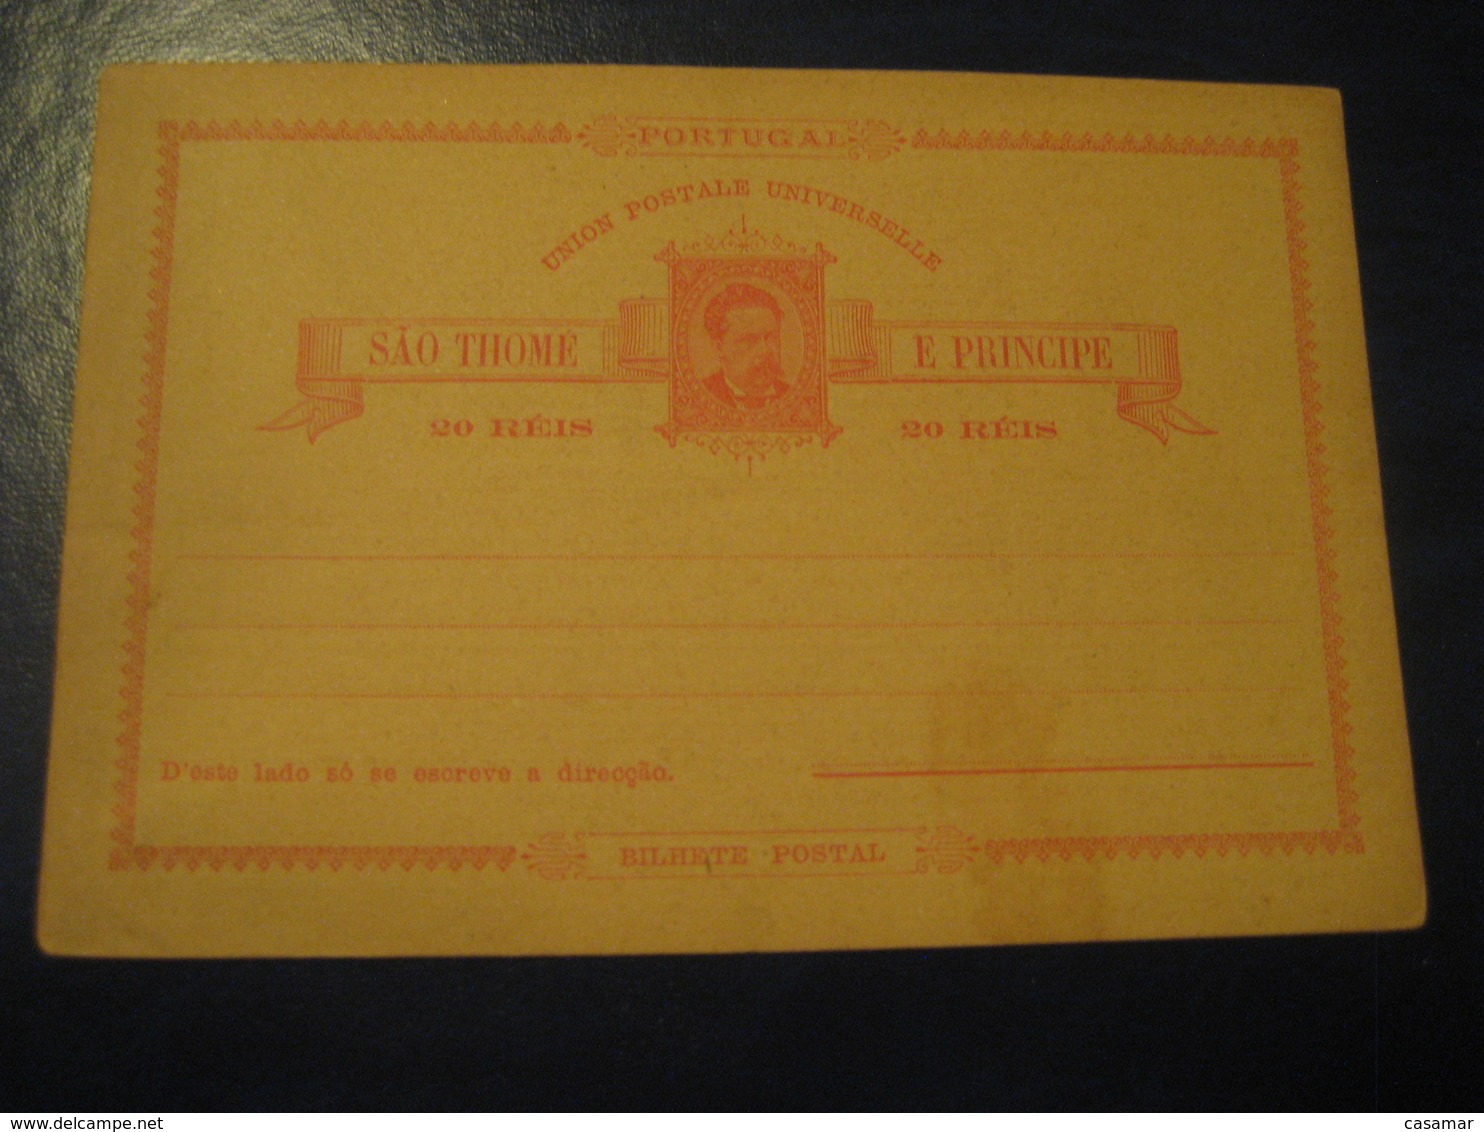 20 Reis SAO THOME E. PRINCE St. Thomas & Prince Bilhete Postal UPU Portugal Colonies Postal Stationery Card - St. Thomas & Prince